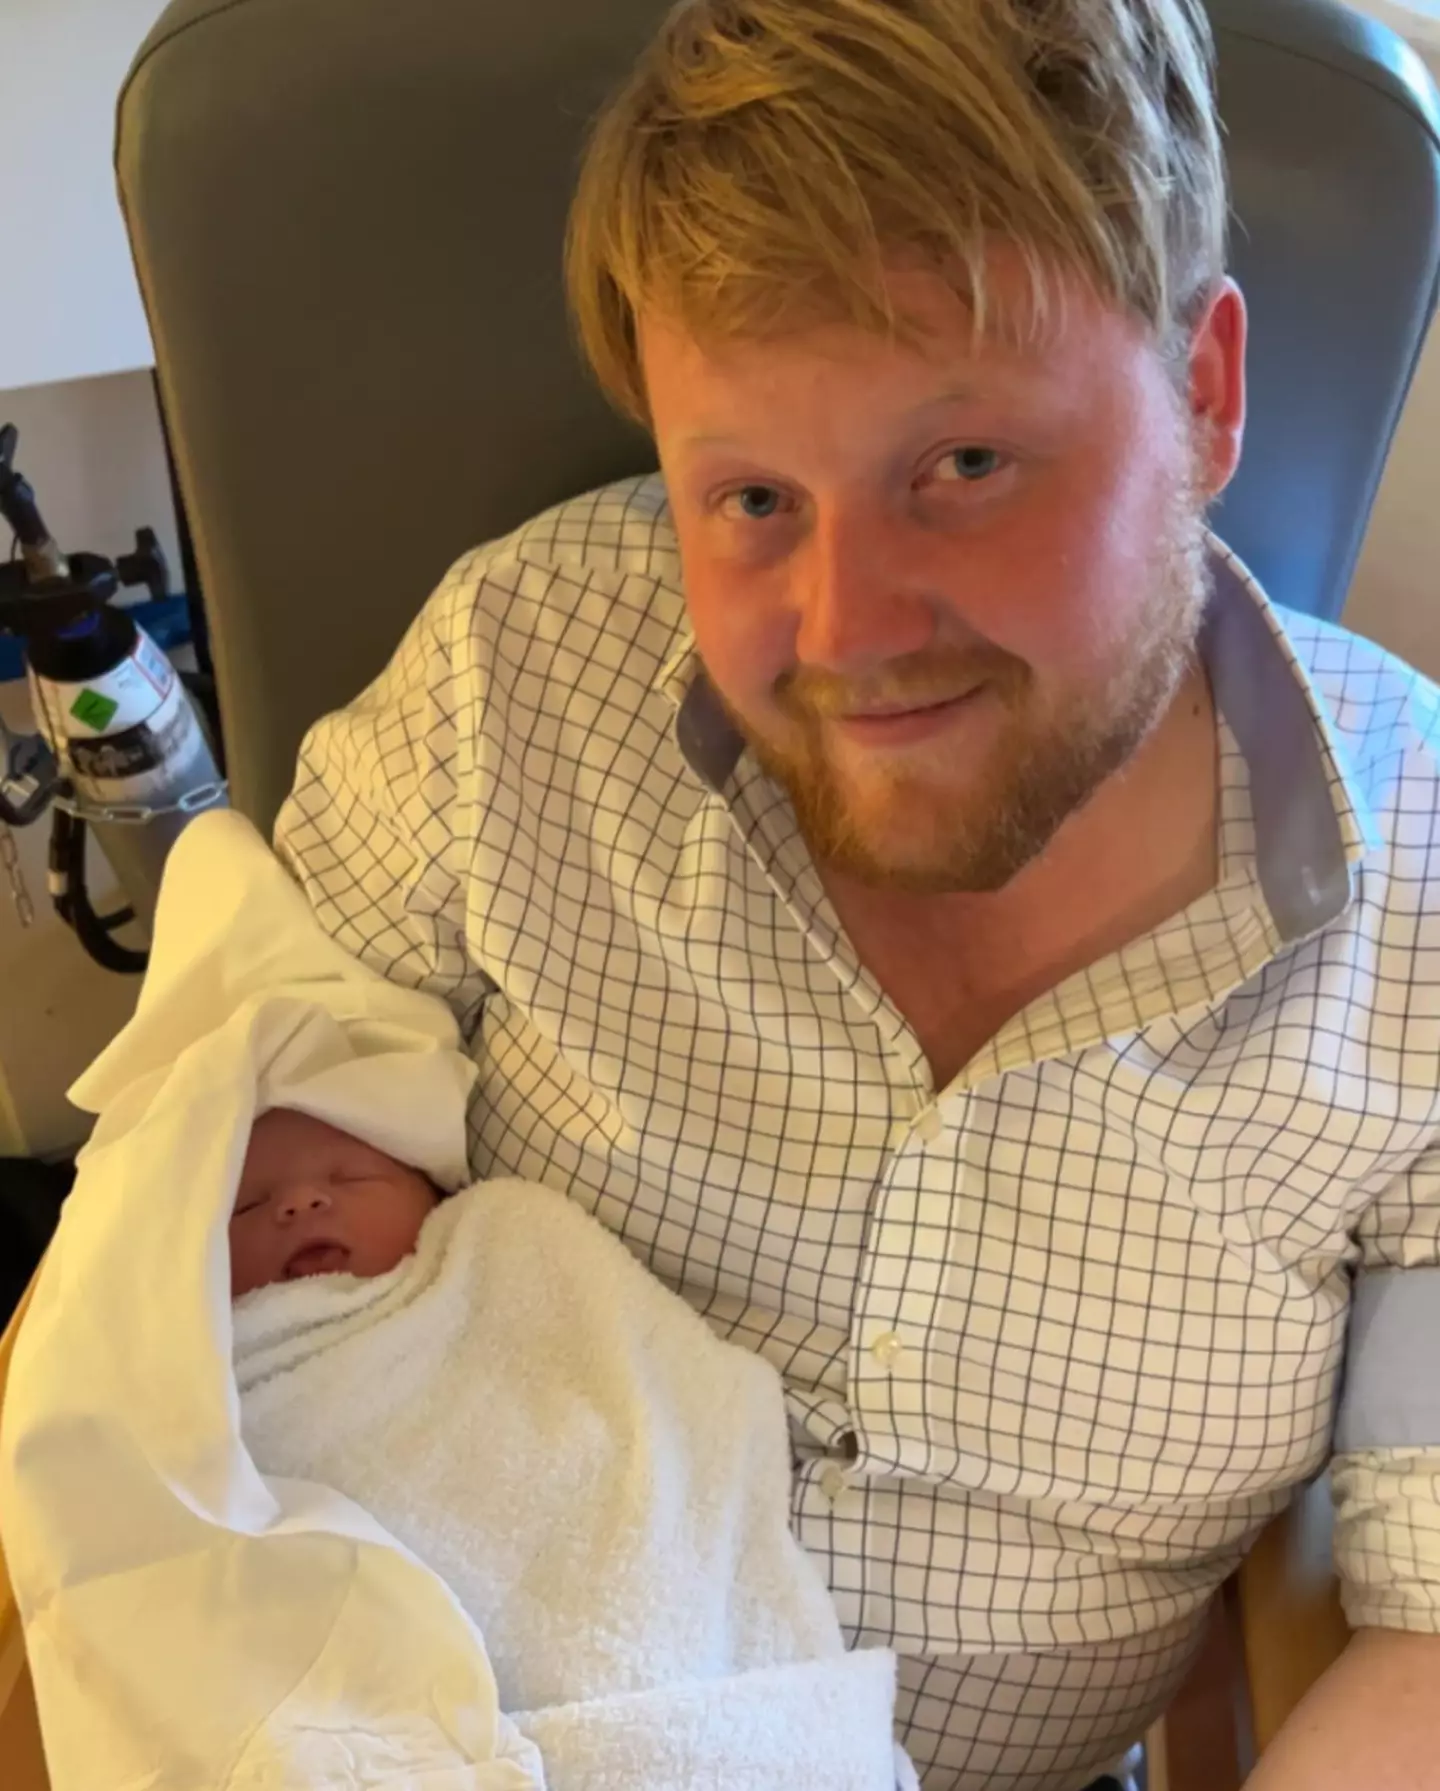 Cooper with his newborn daughter, Willa Grace Cooper.